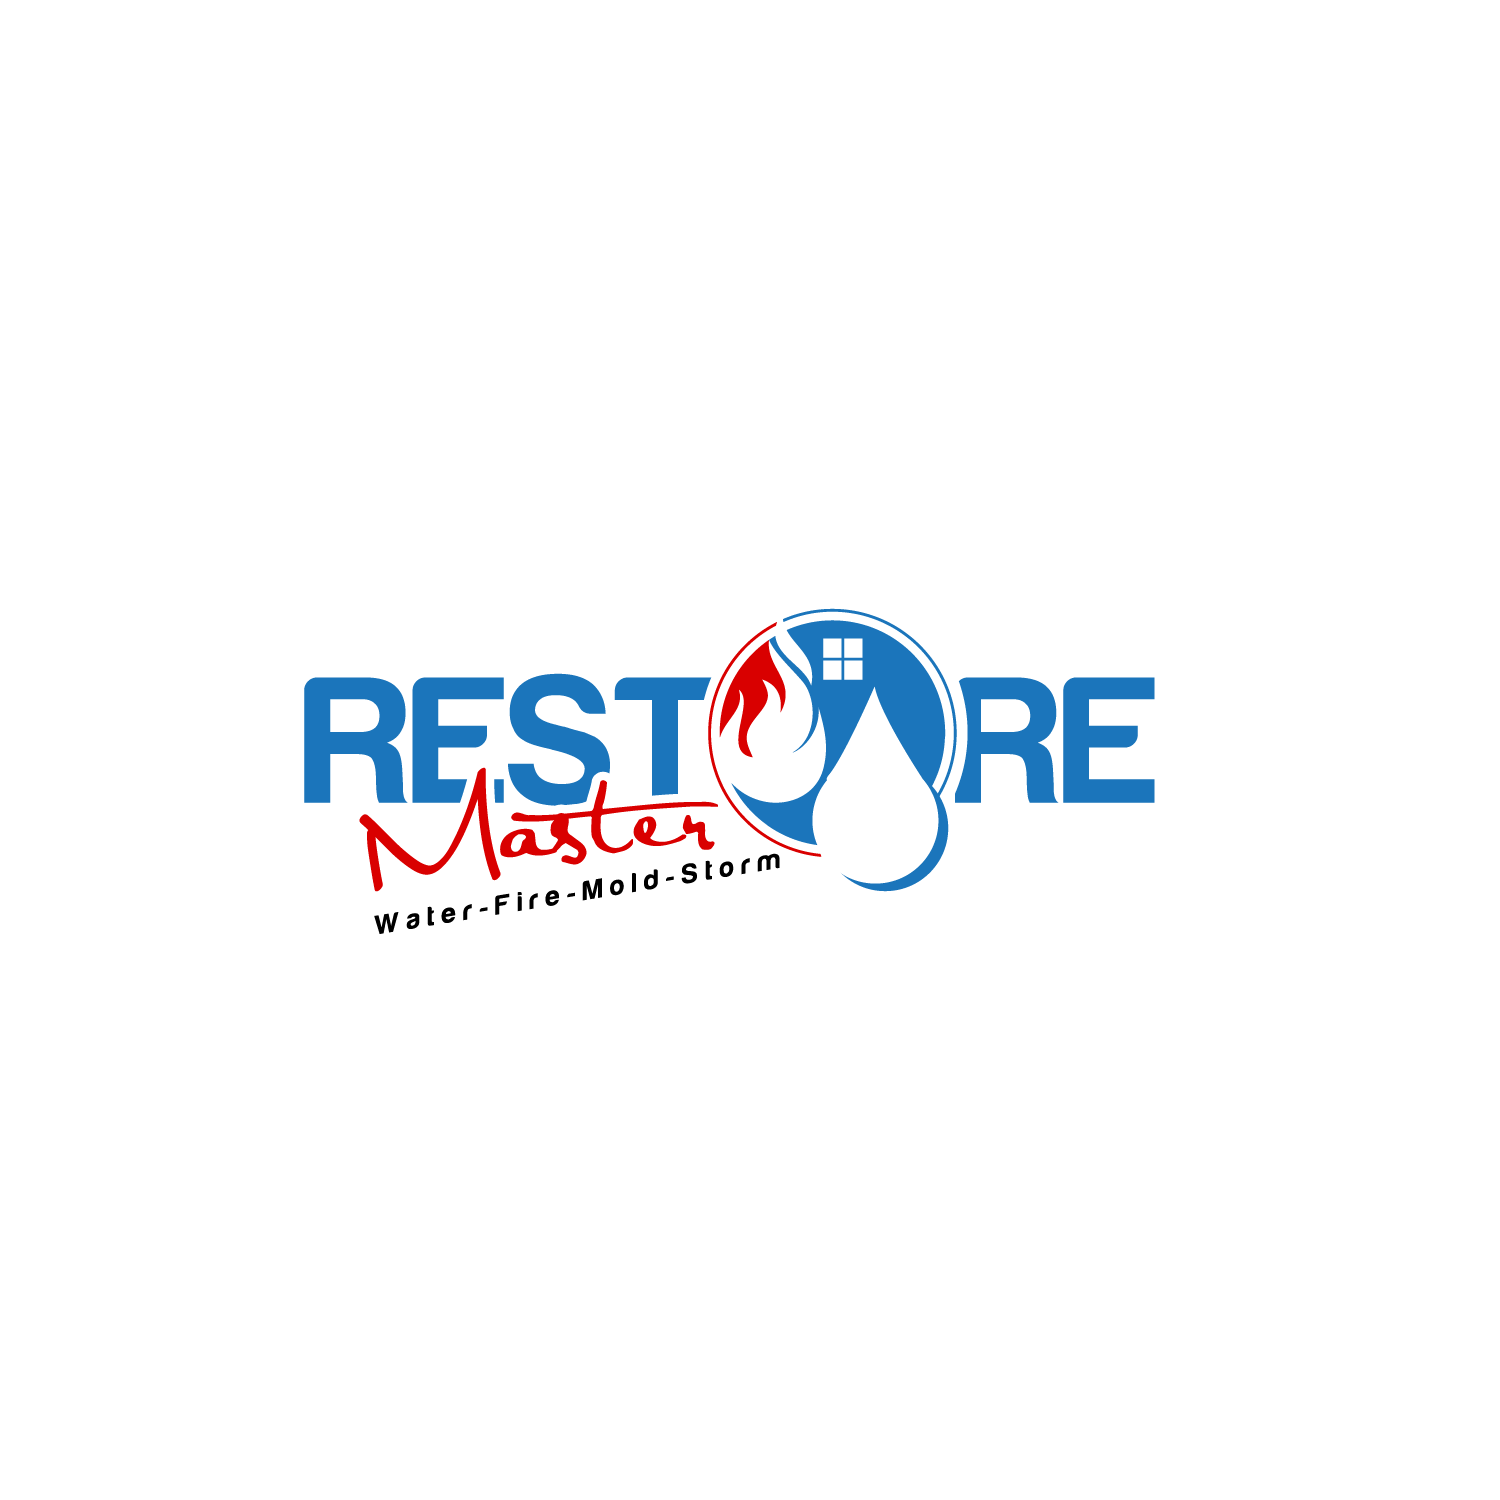 Restore Master